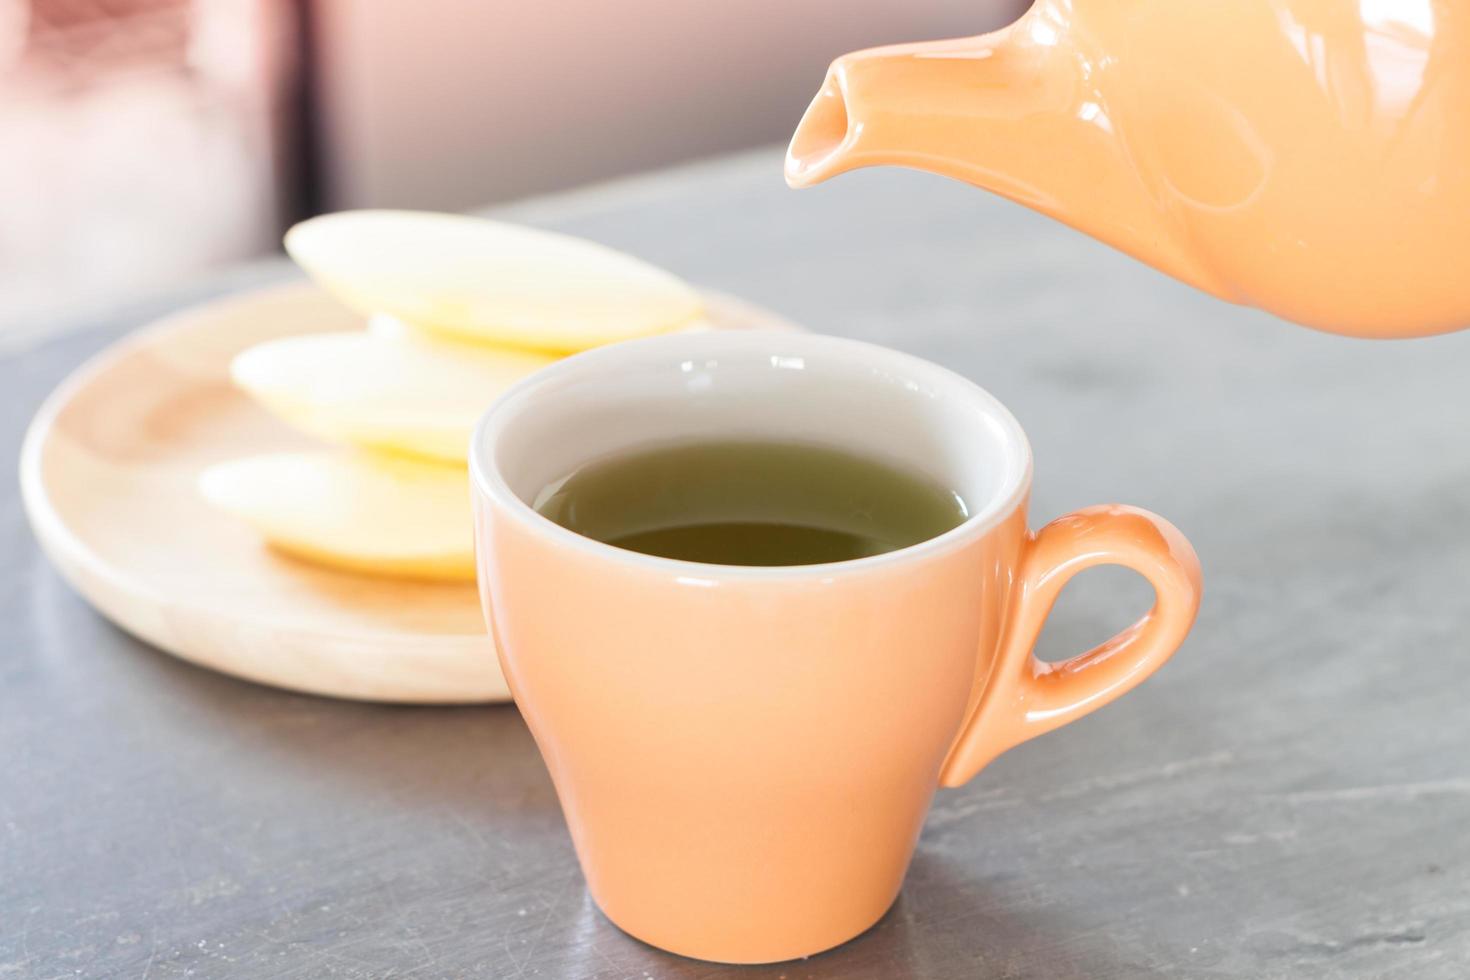 thé vert dans une tasse orange photo